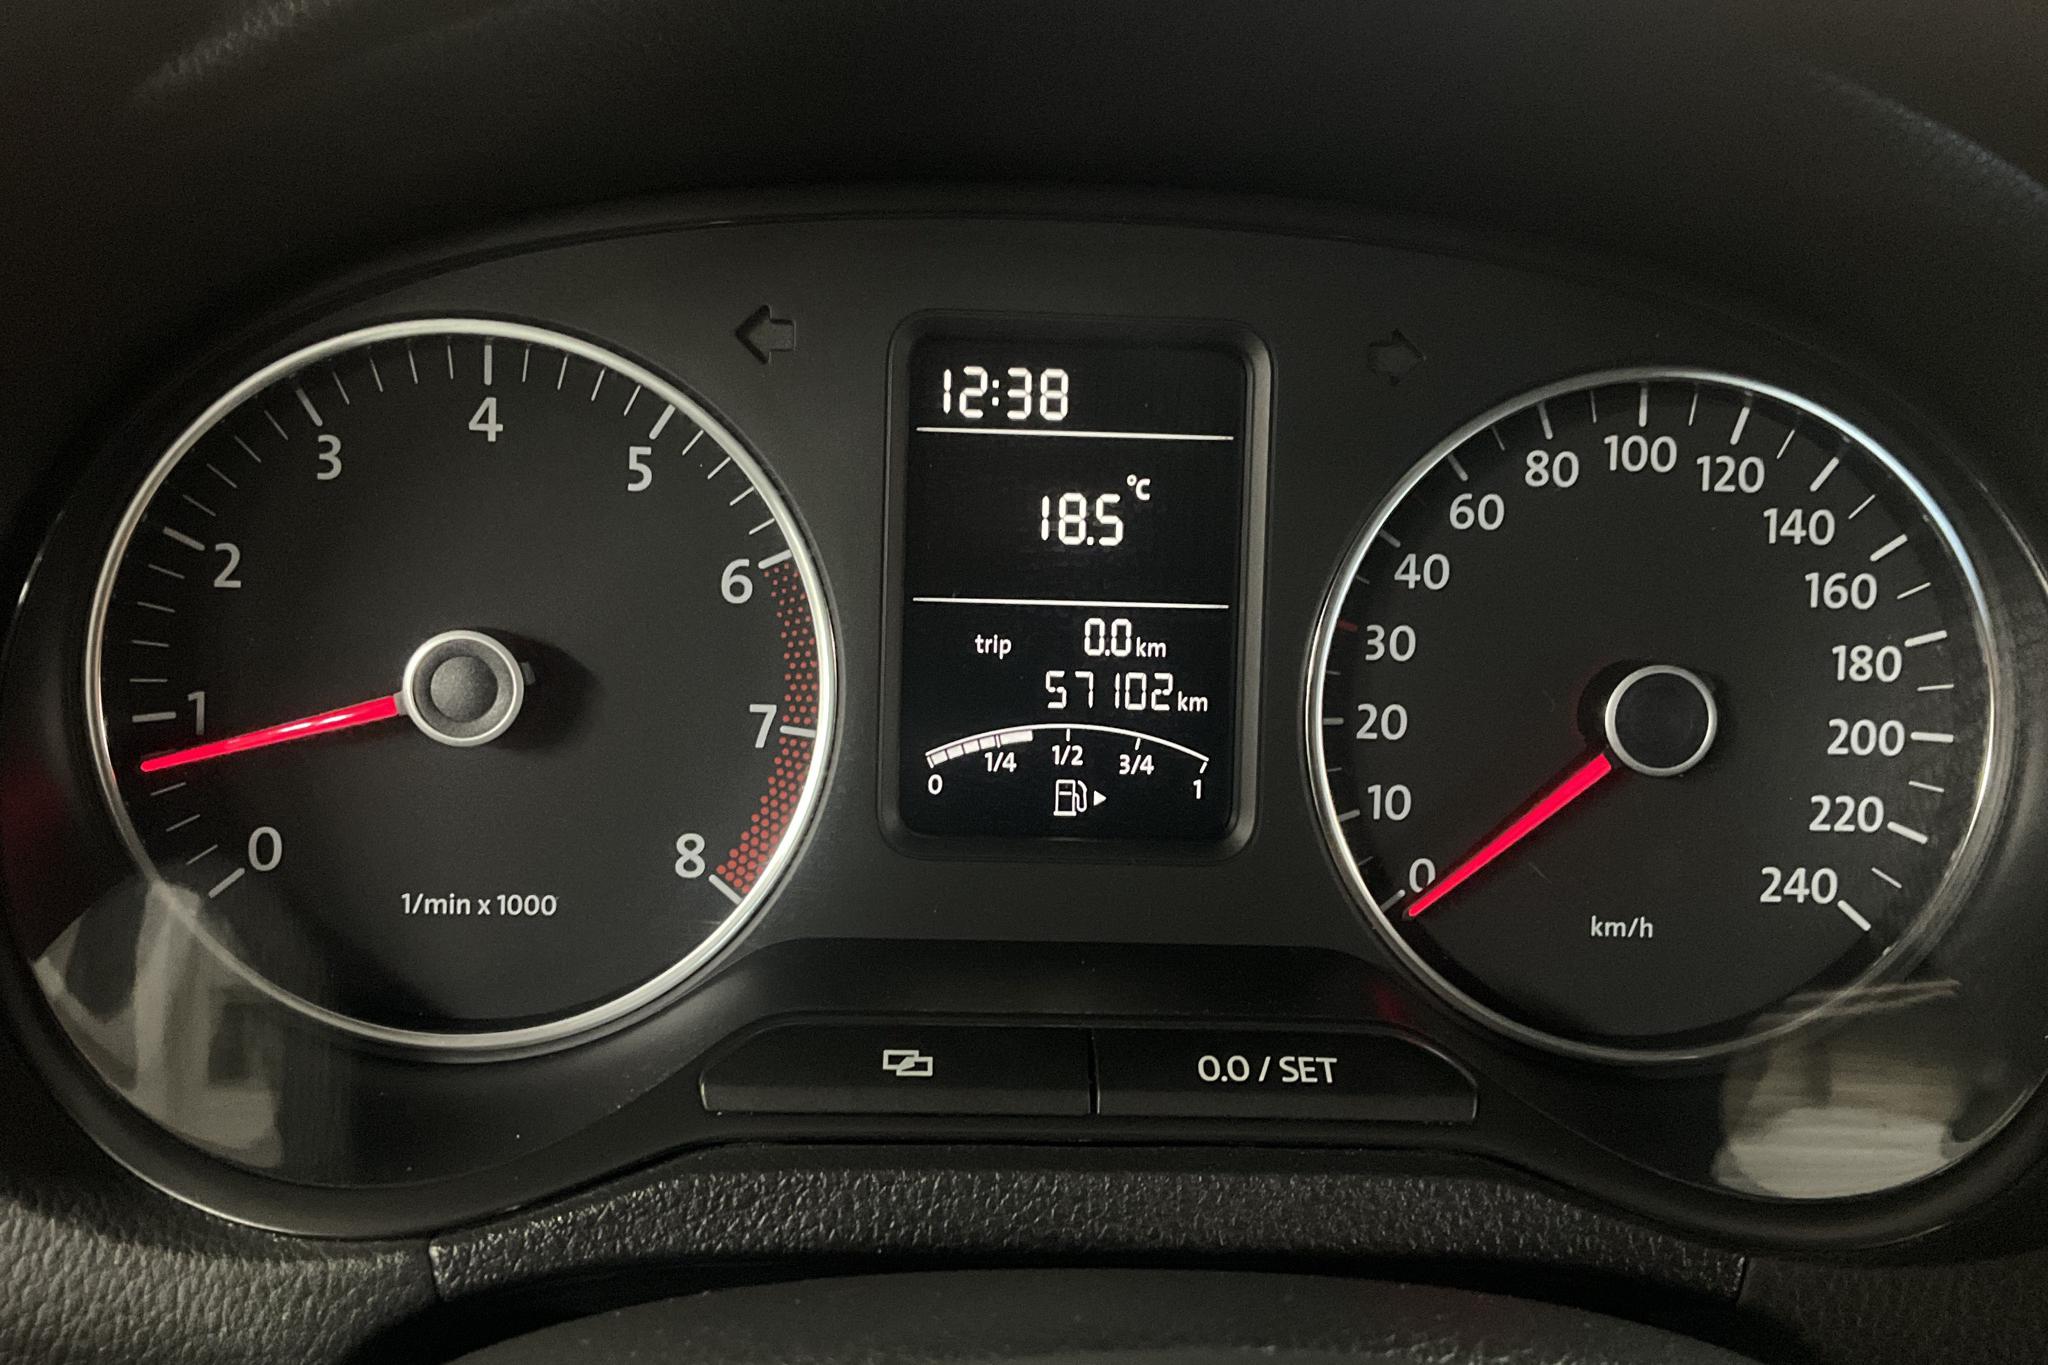 VW Polo 1.2 TSI 5dr (90hk) - 5 710 mil - Manuell - vit - 2012